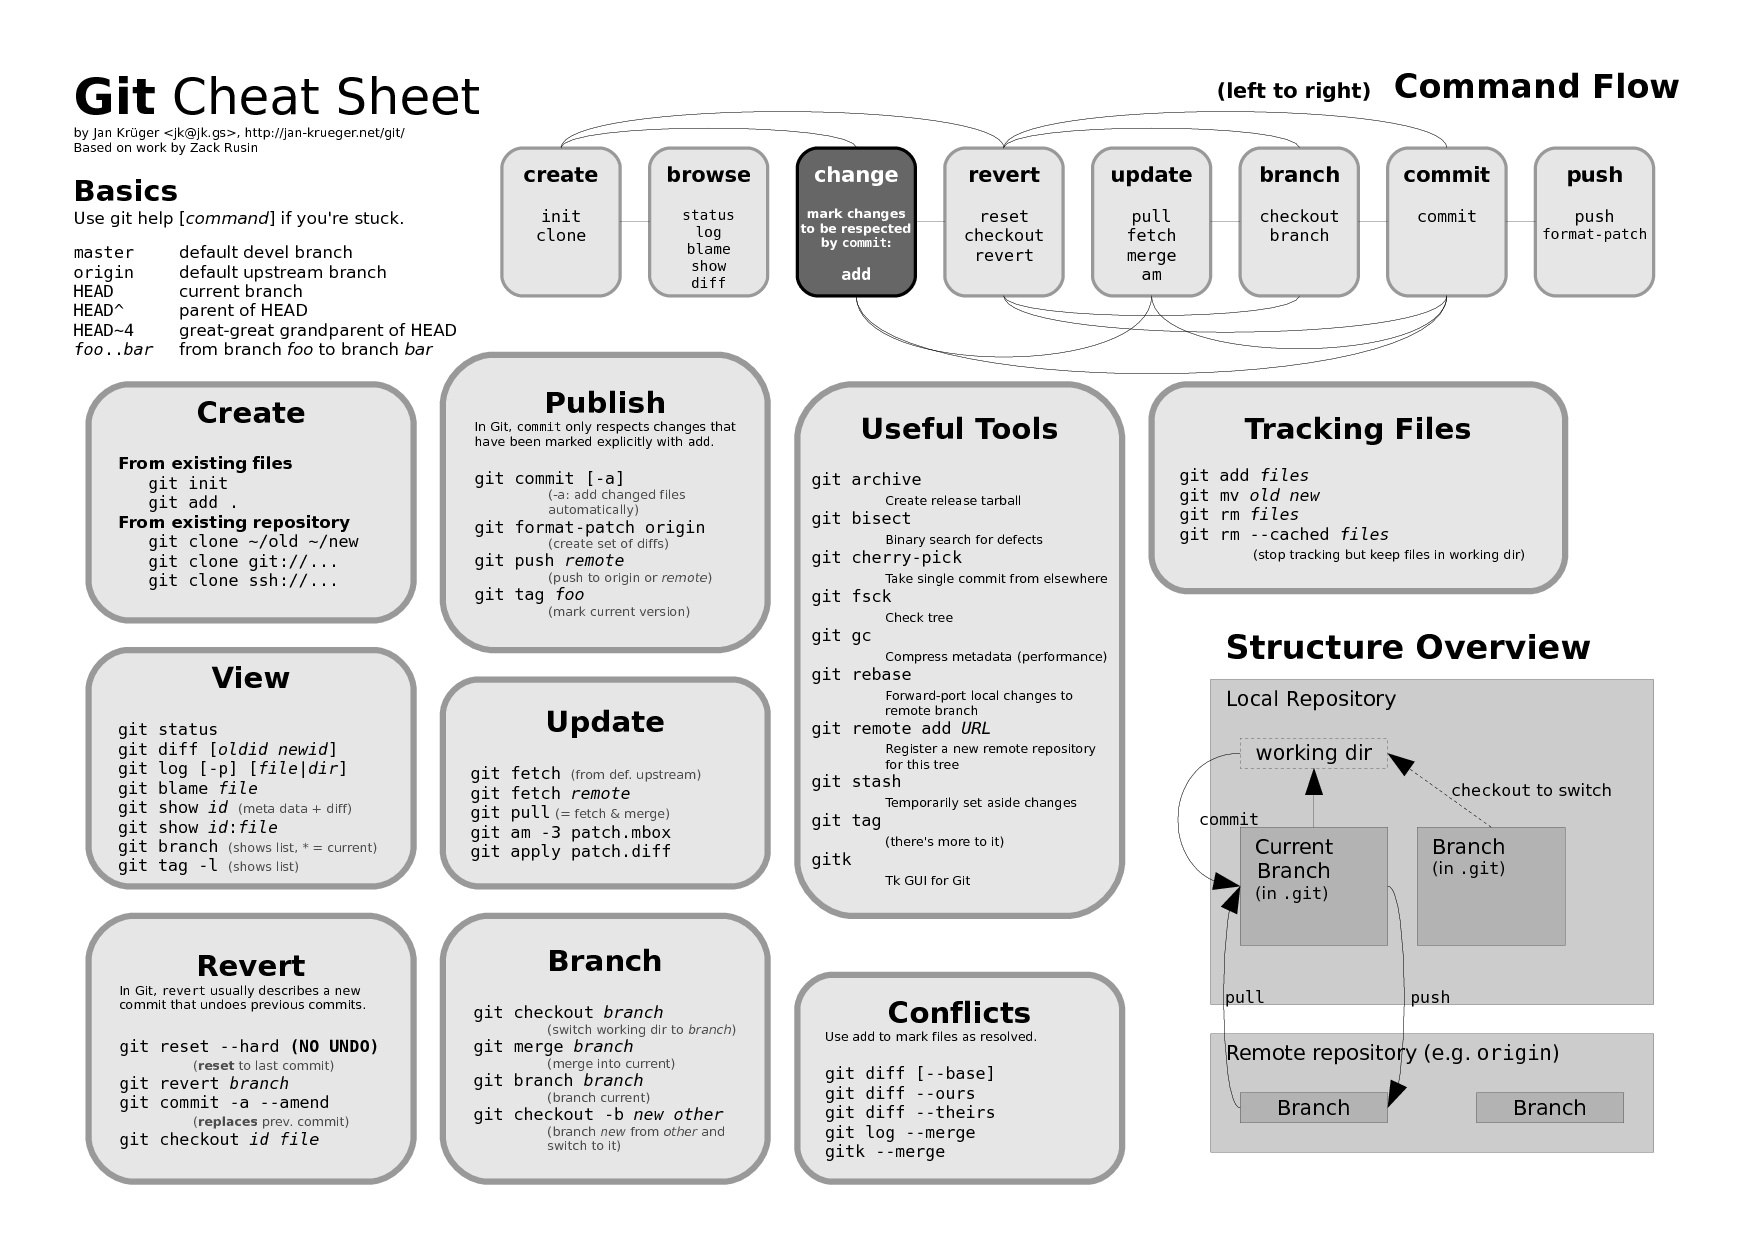 Git cheat sheet.jpg-405.4kB